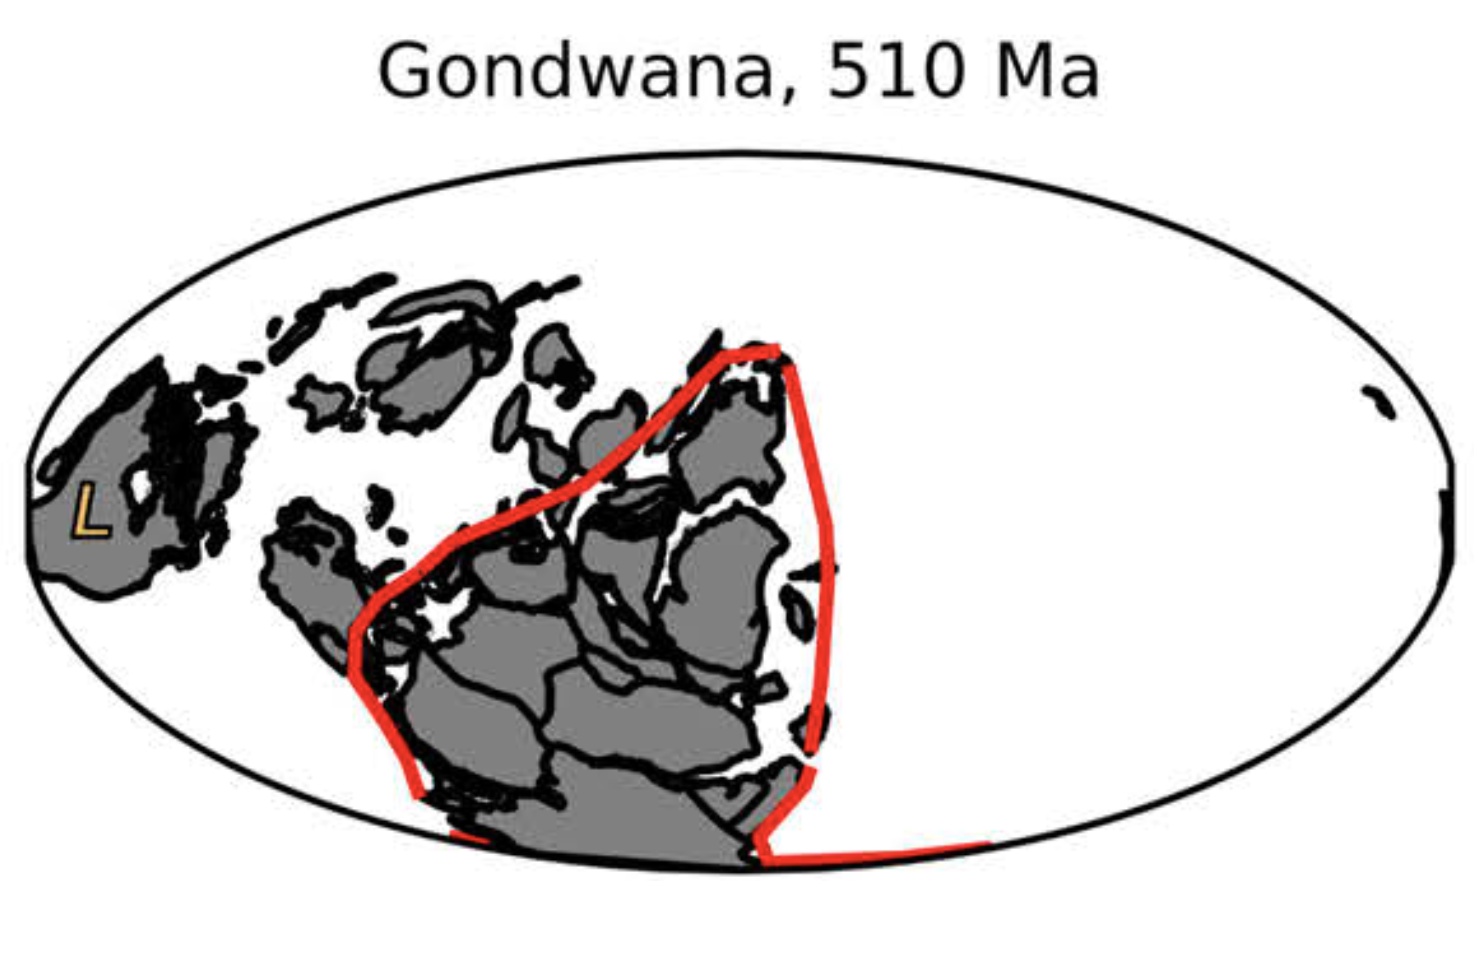 Subduction around Gondwana 510 million years ago.